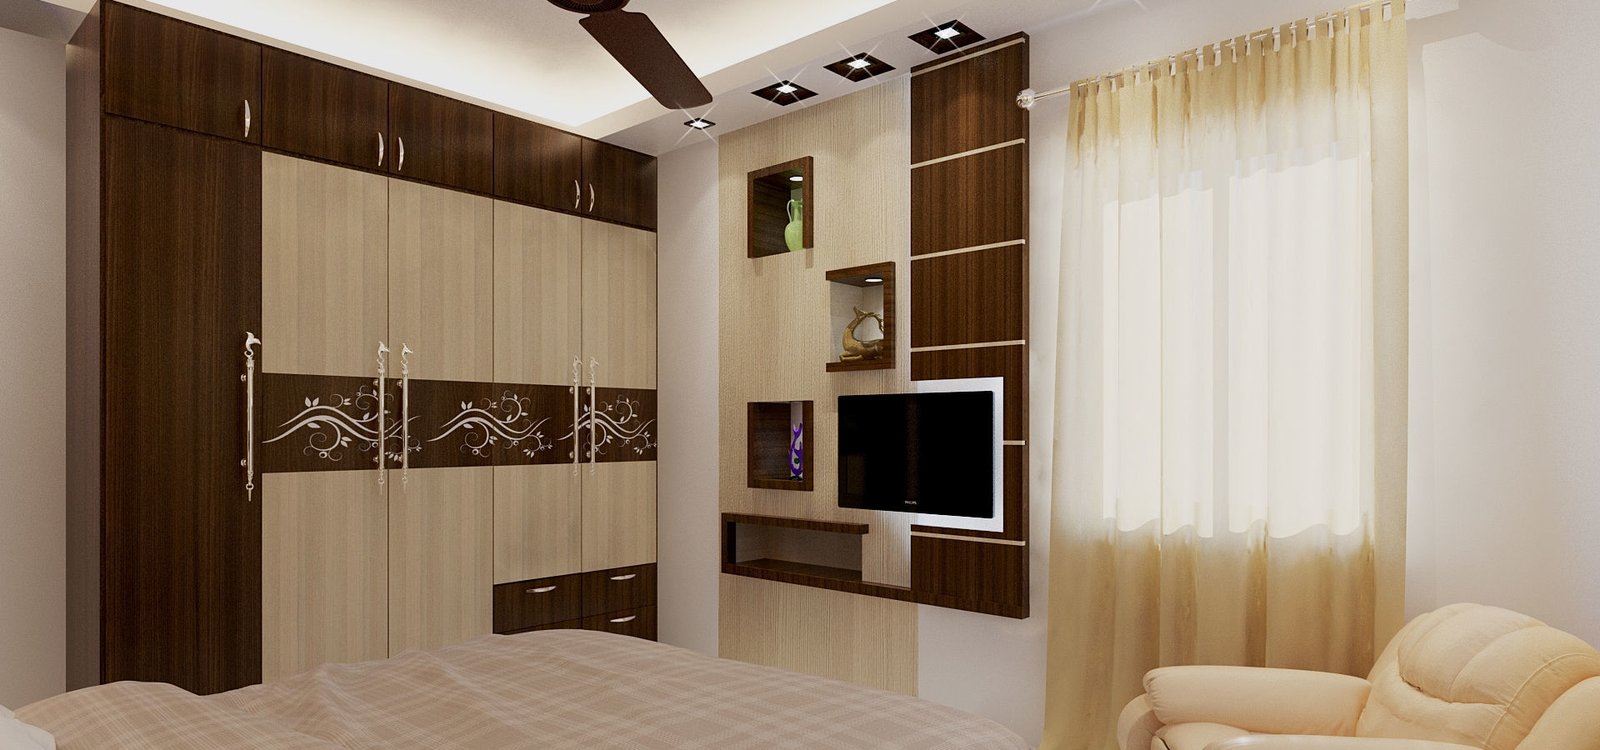 best interior designer in chennai - residential interior